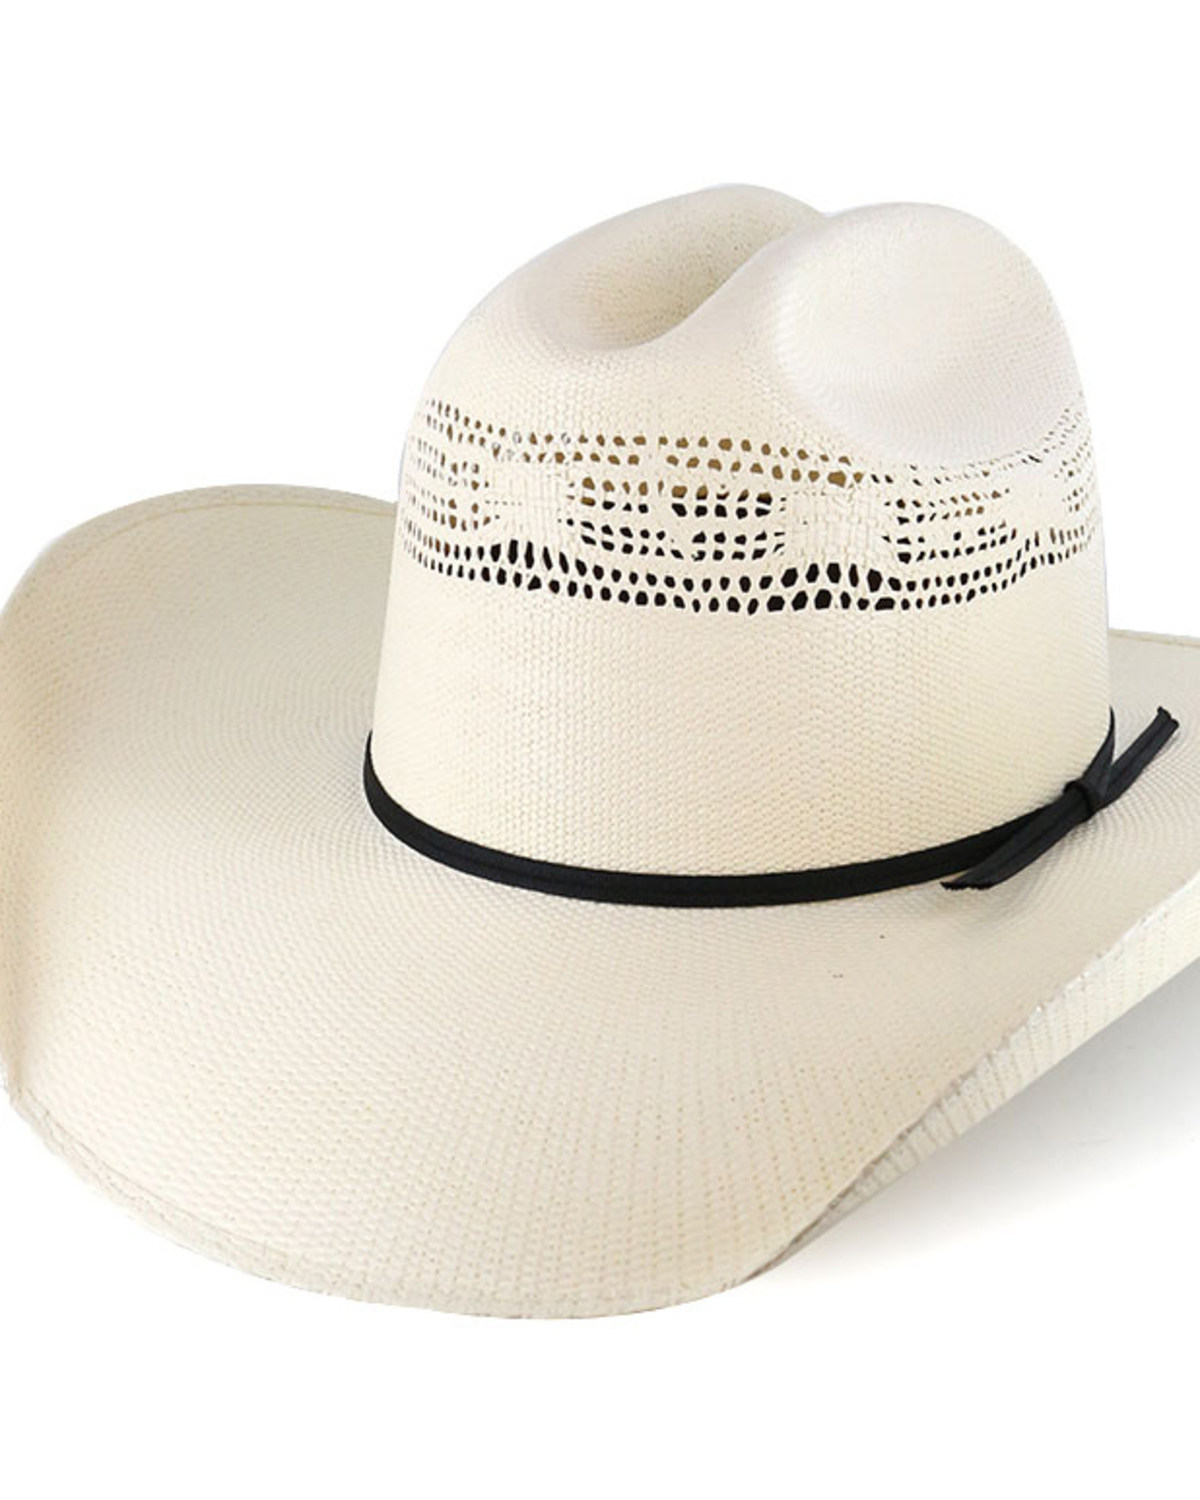 Cody James Straw Cowboy Hat